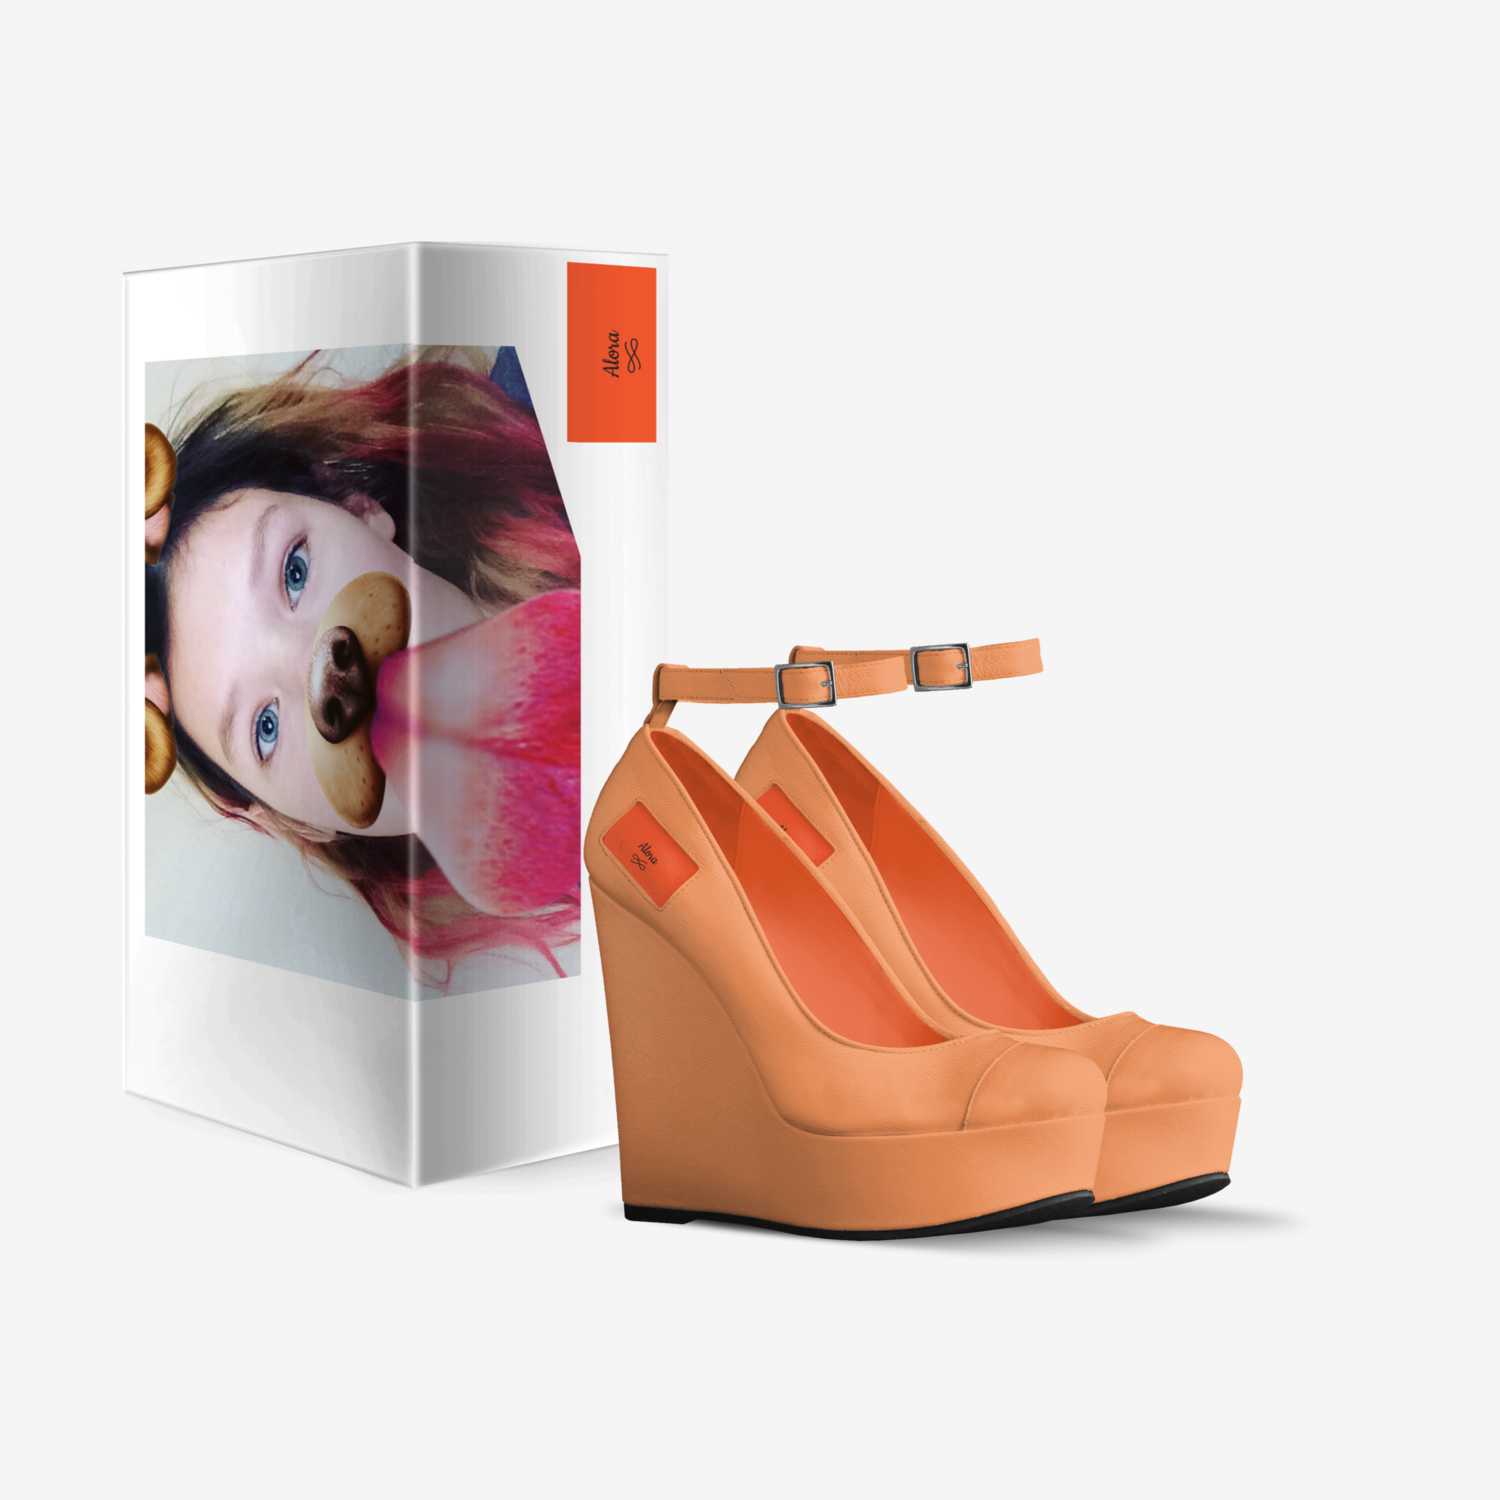 Alora custom made in Italy shoes by Alora Peltzman | Box view